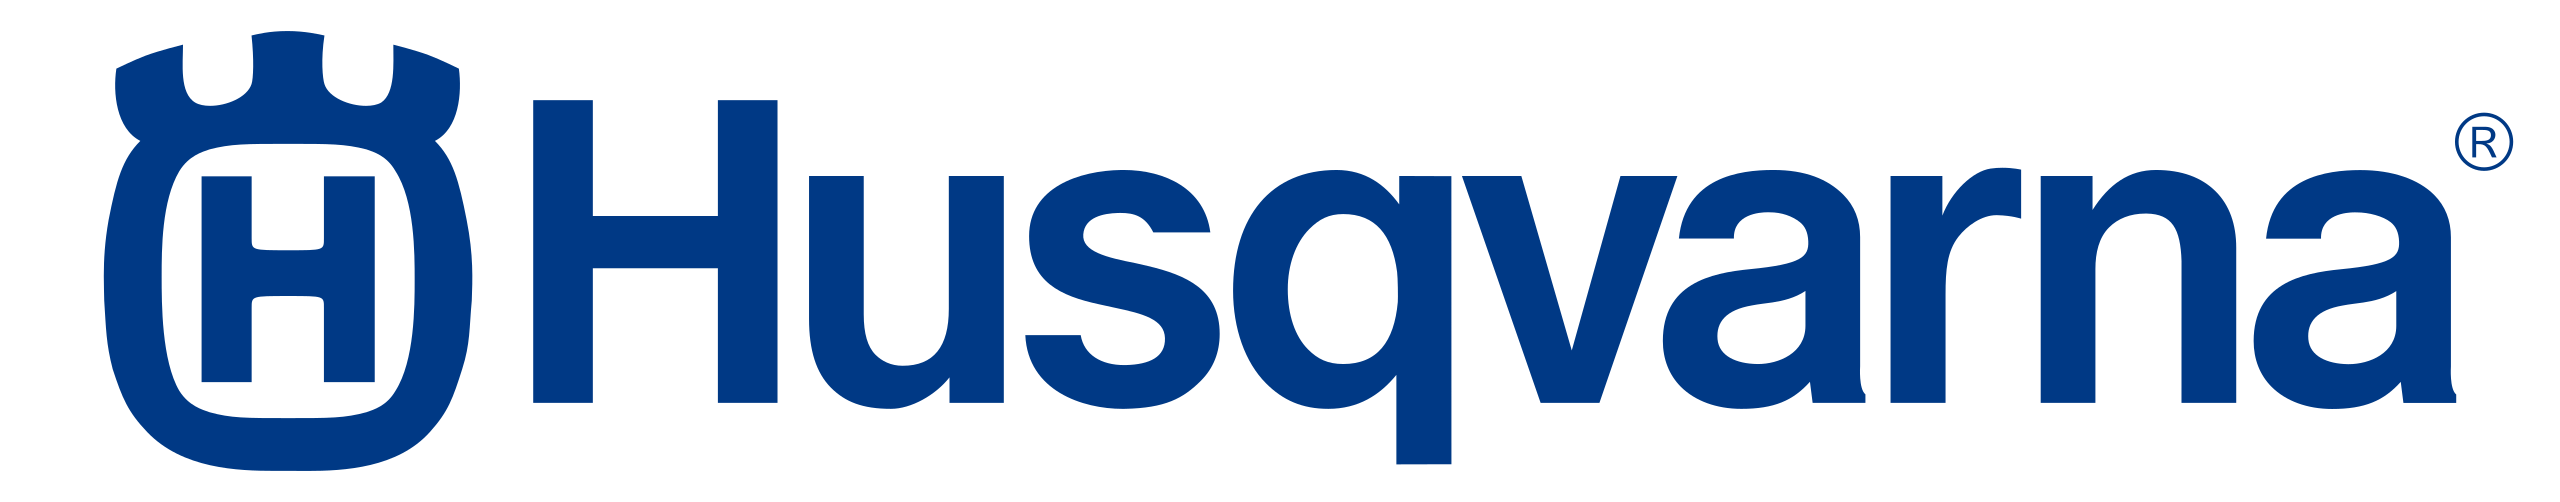 2560px-Husqvarna_logo.svg.png